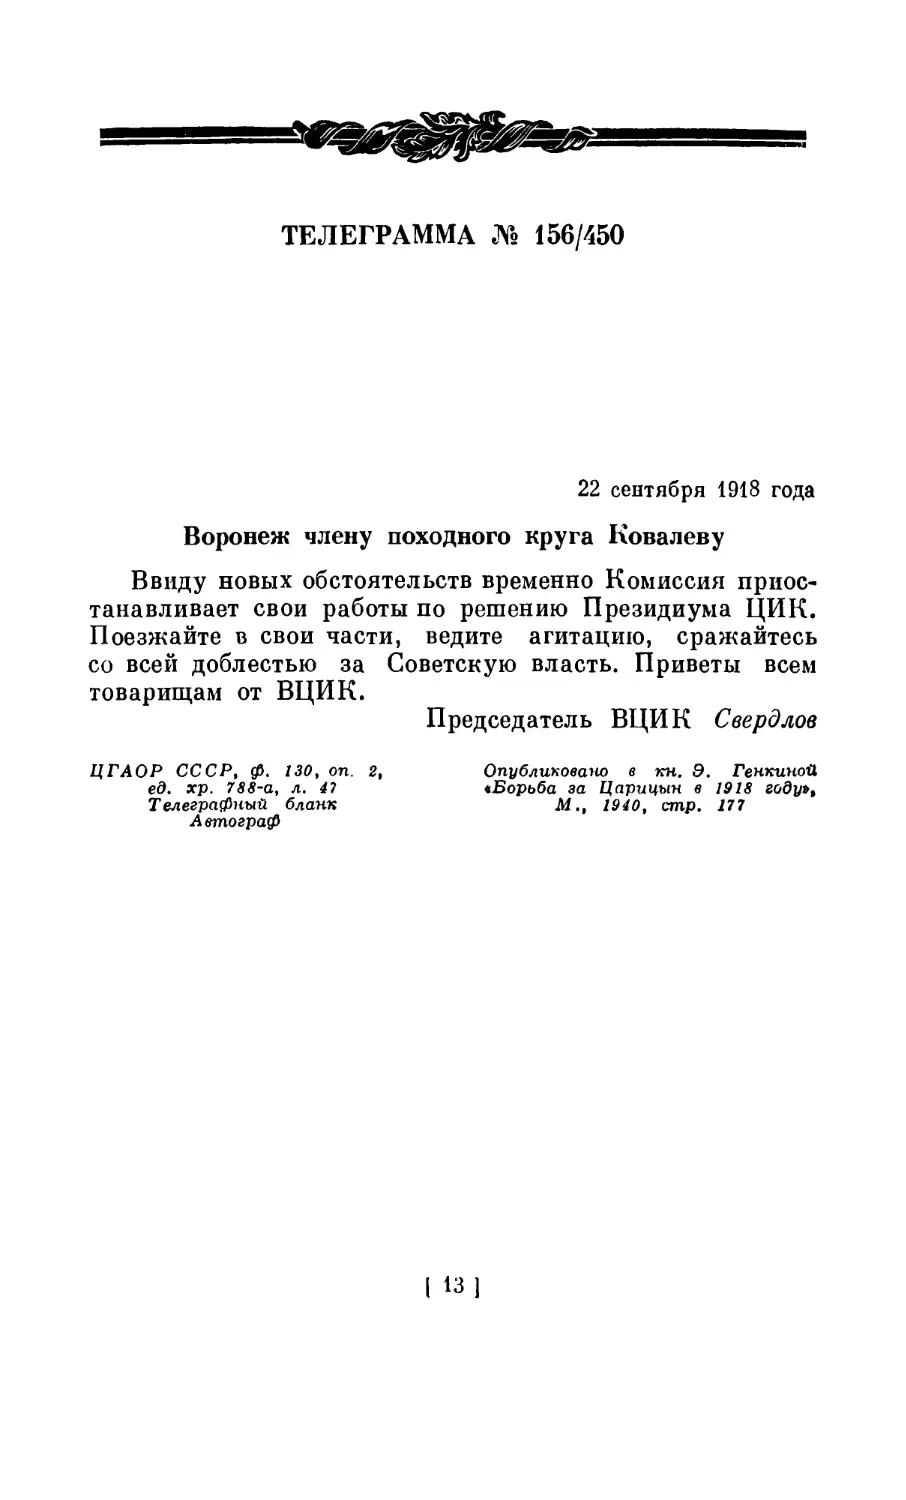 ТЕЛЕГРАММА № 156/450. 22 сентября 1918 года